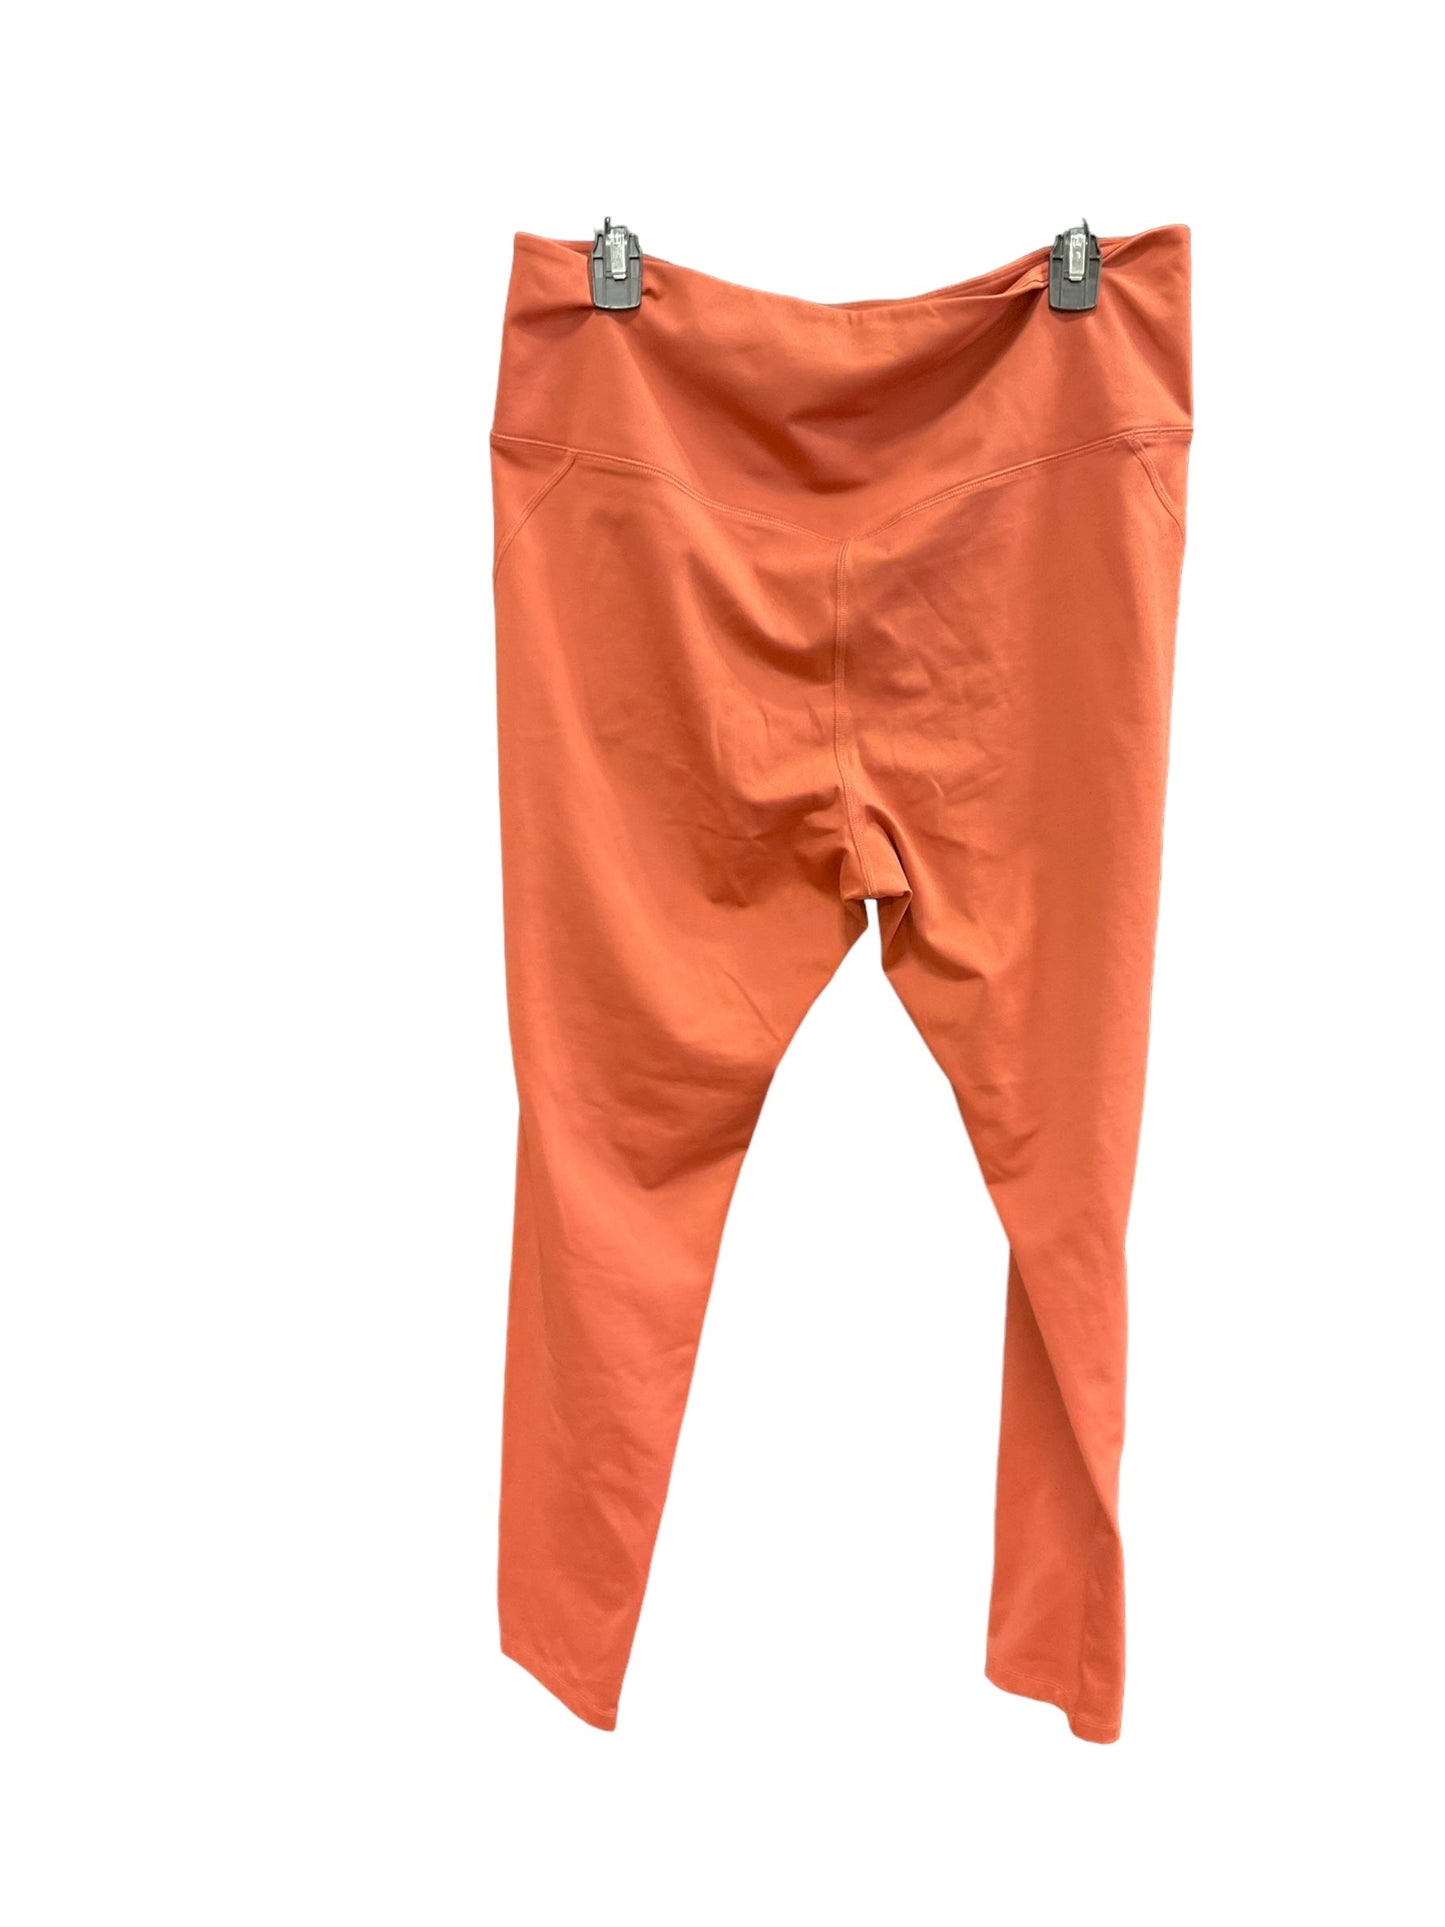 Orange Athletic Leggings Clothes Mentor, Size 3x